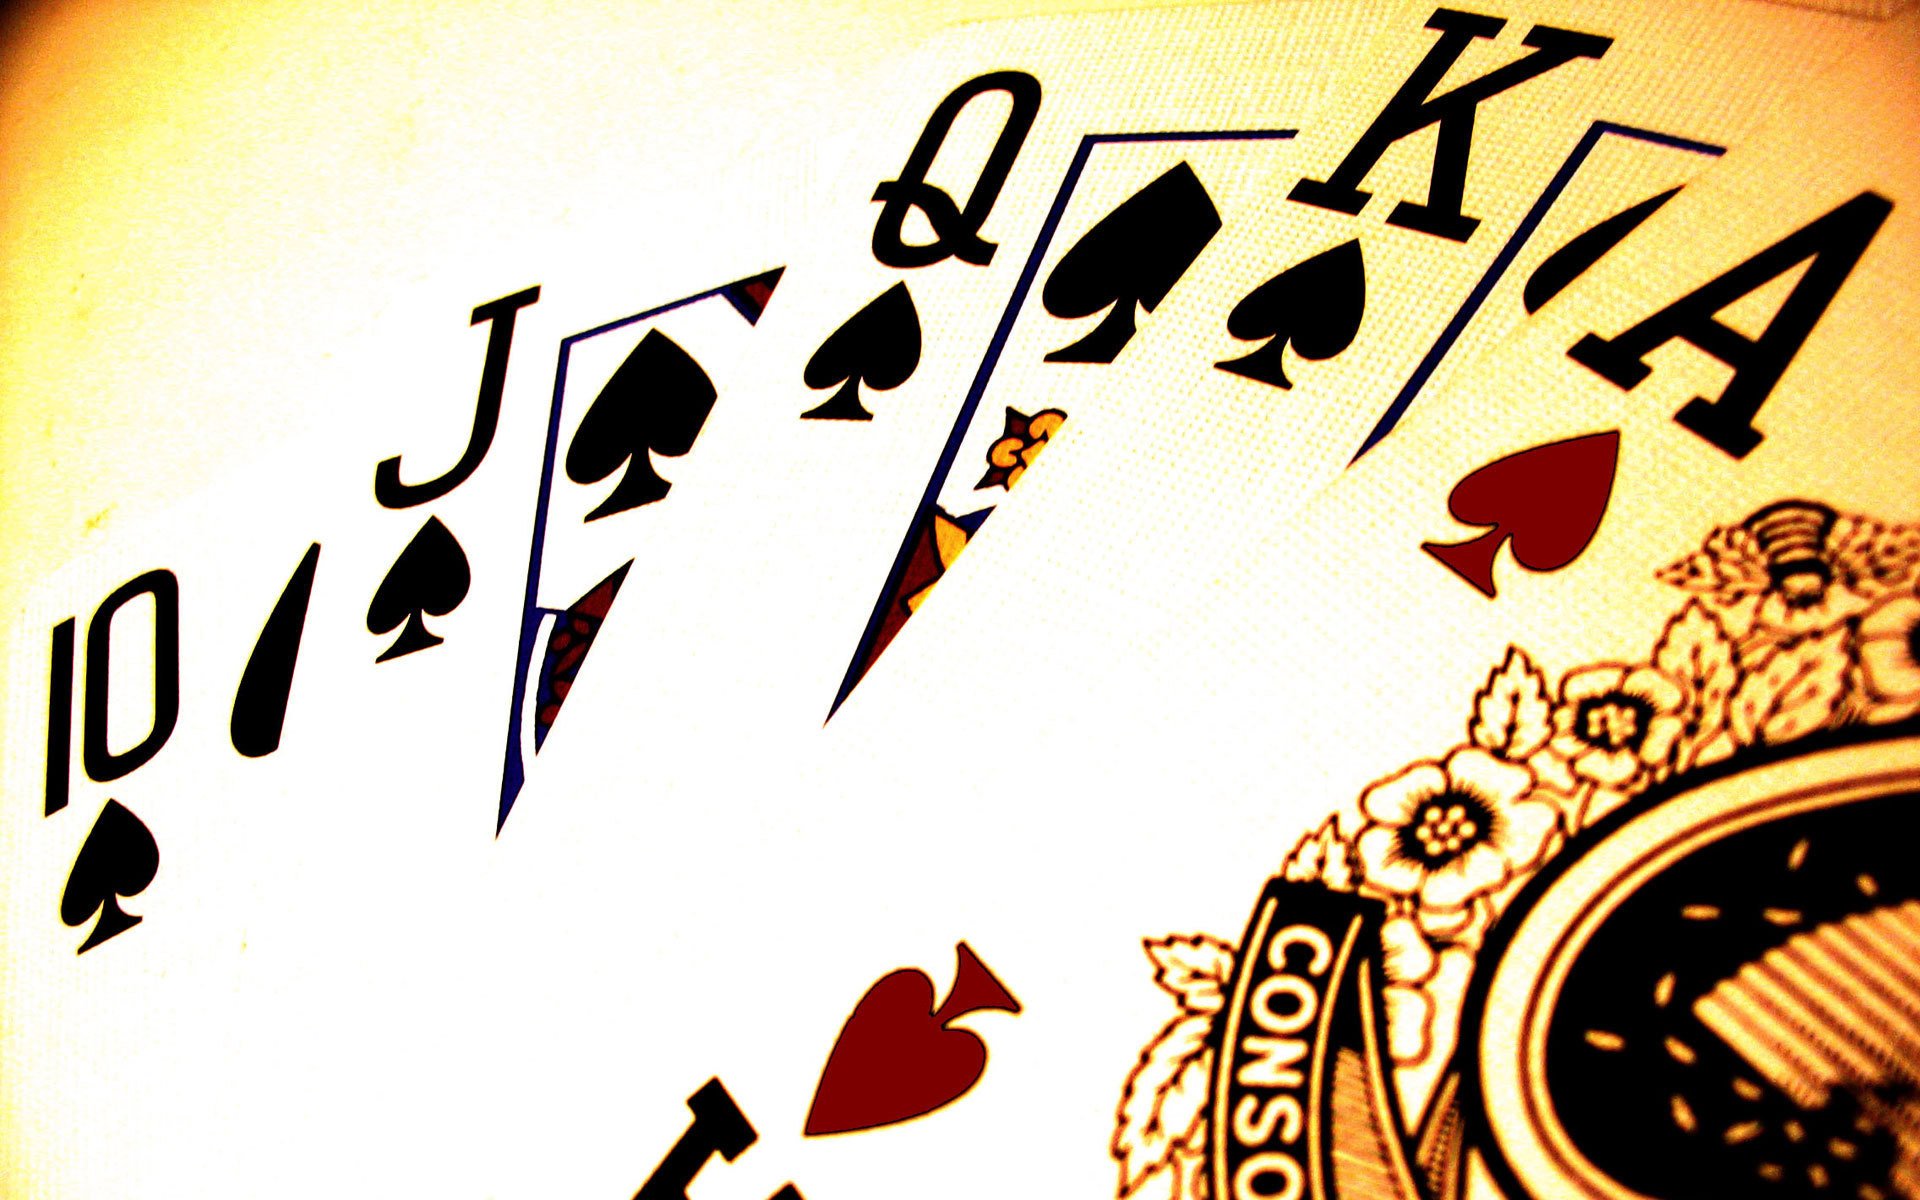 free draw poker games online